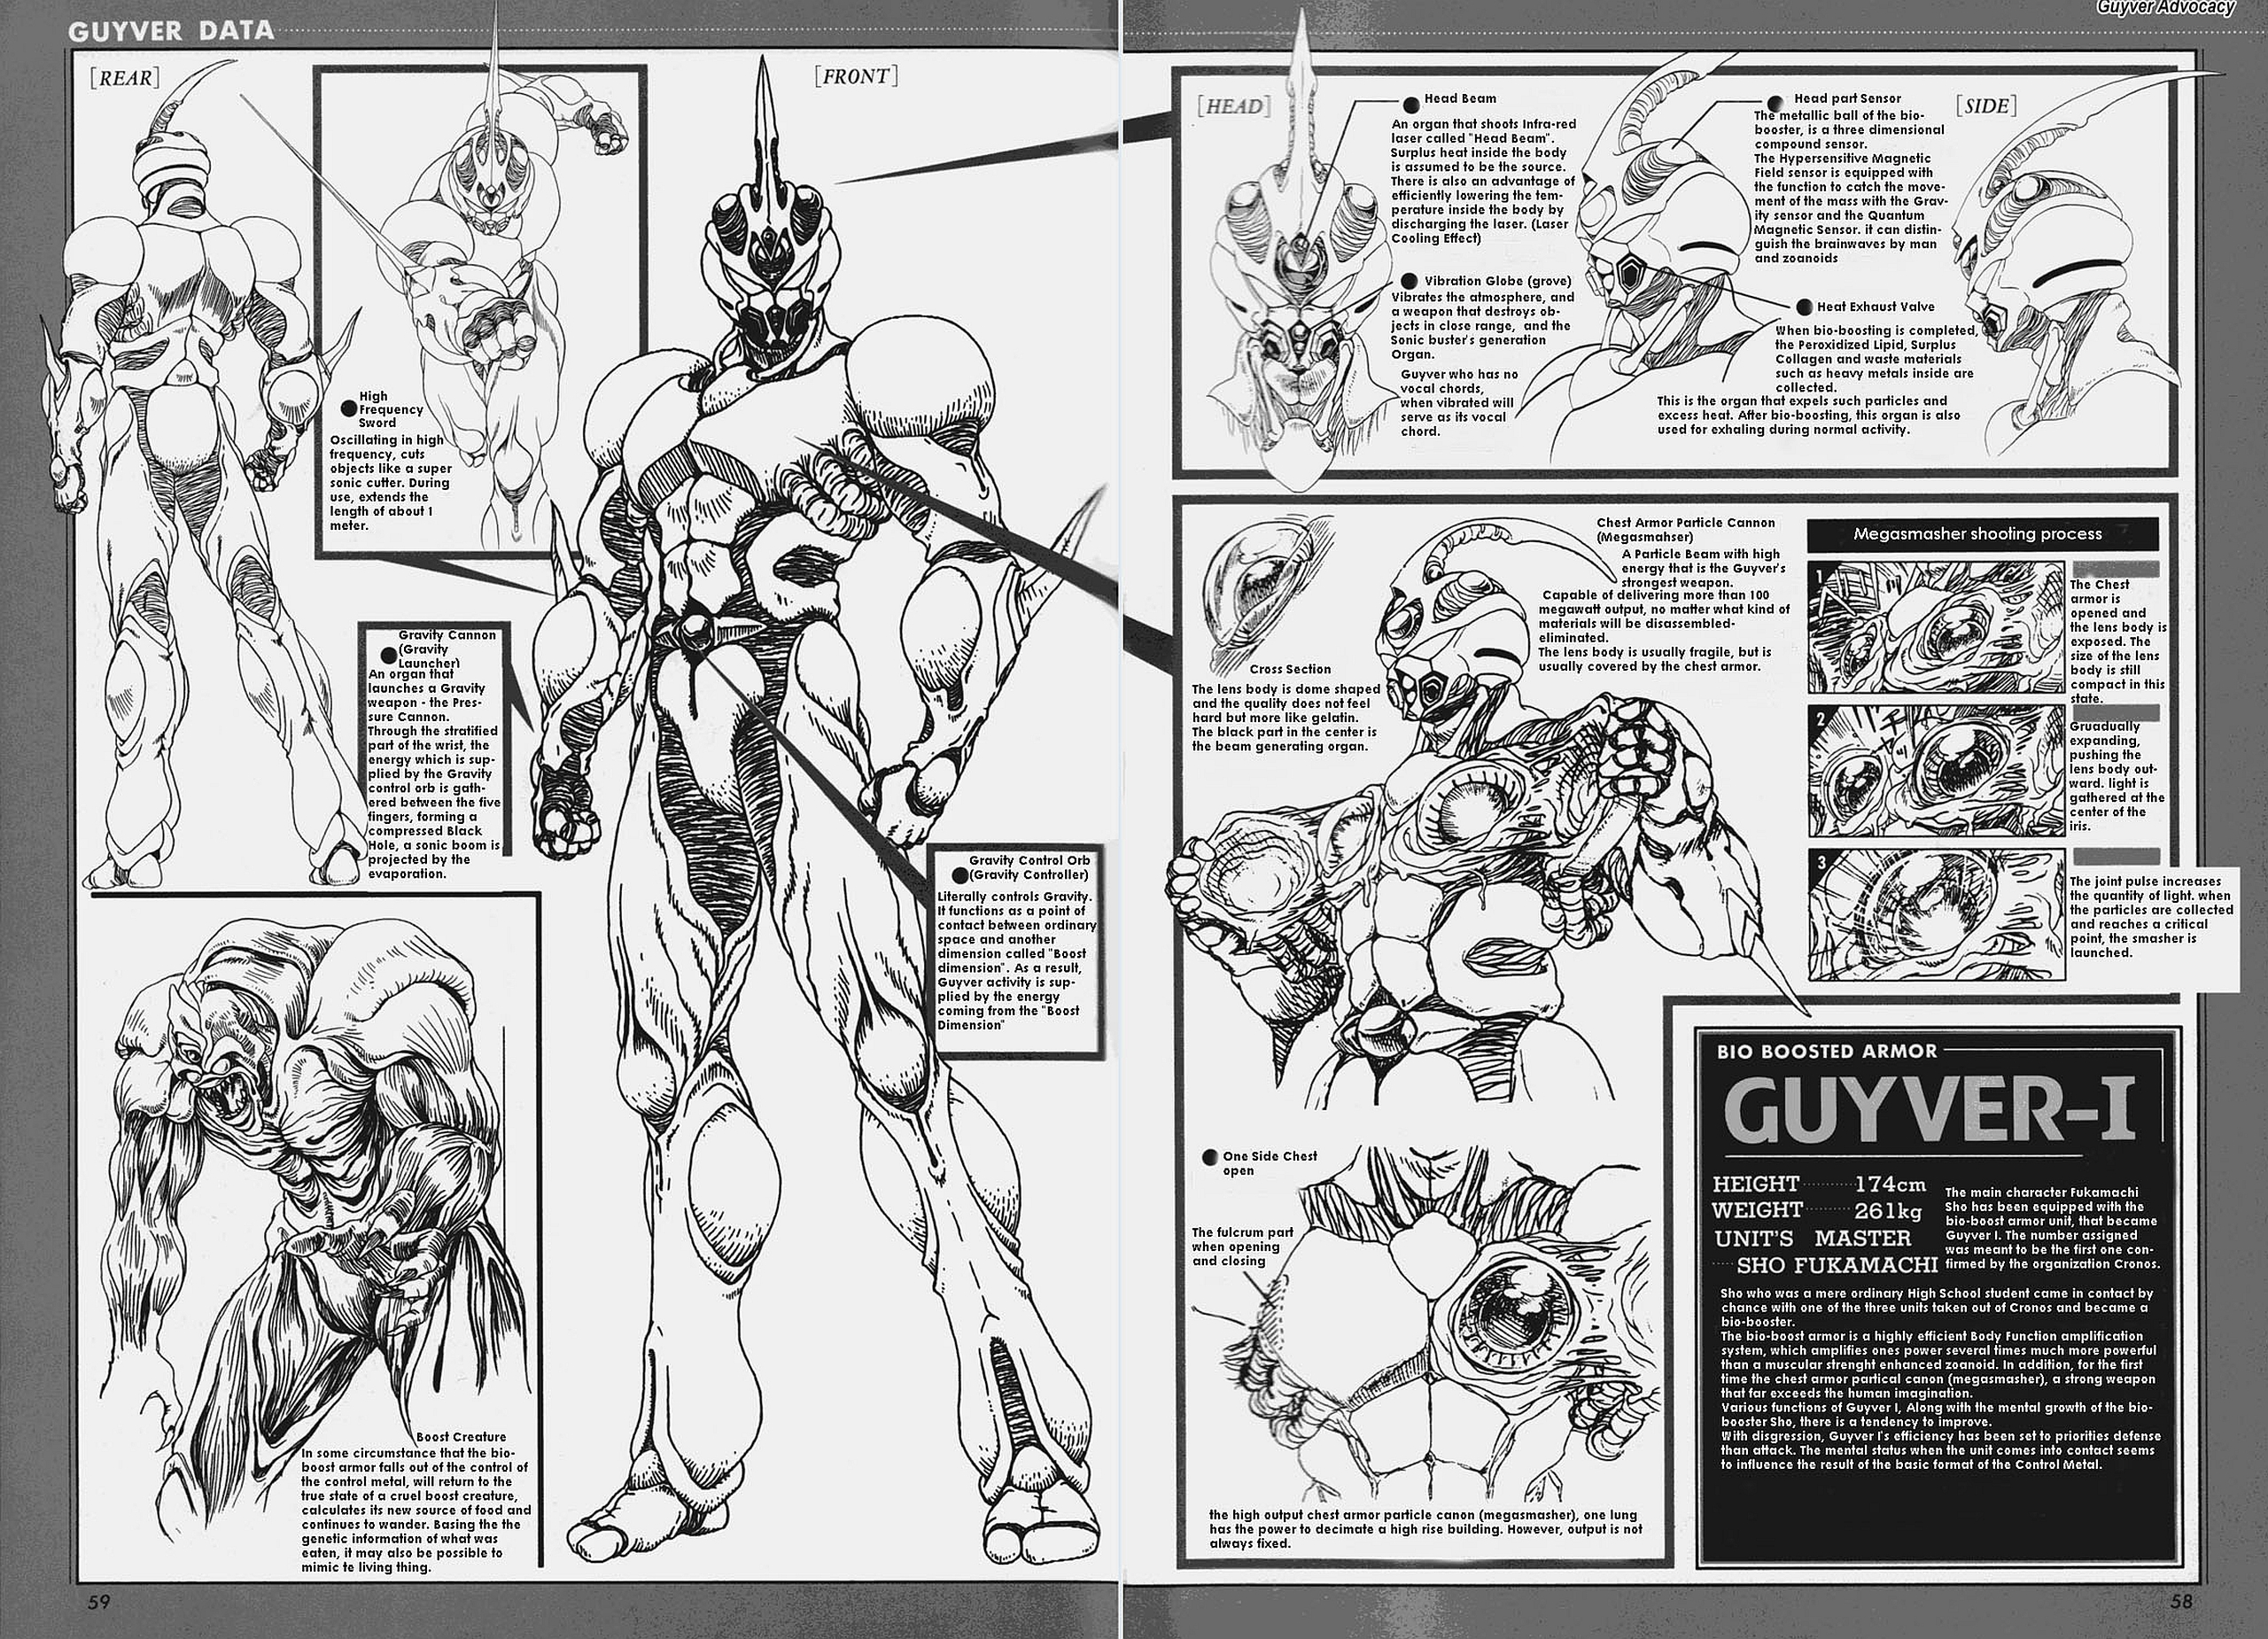 guyver the bioboosted armor, anime UHD